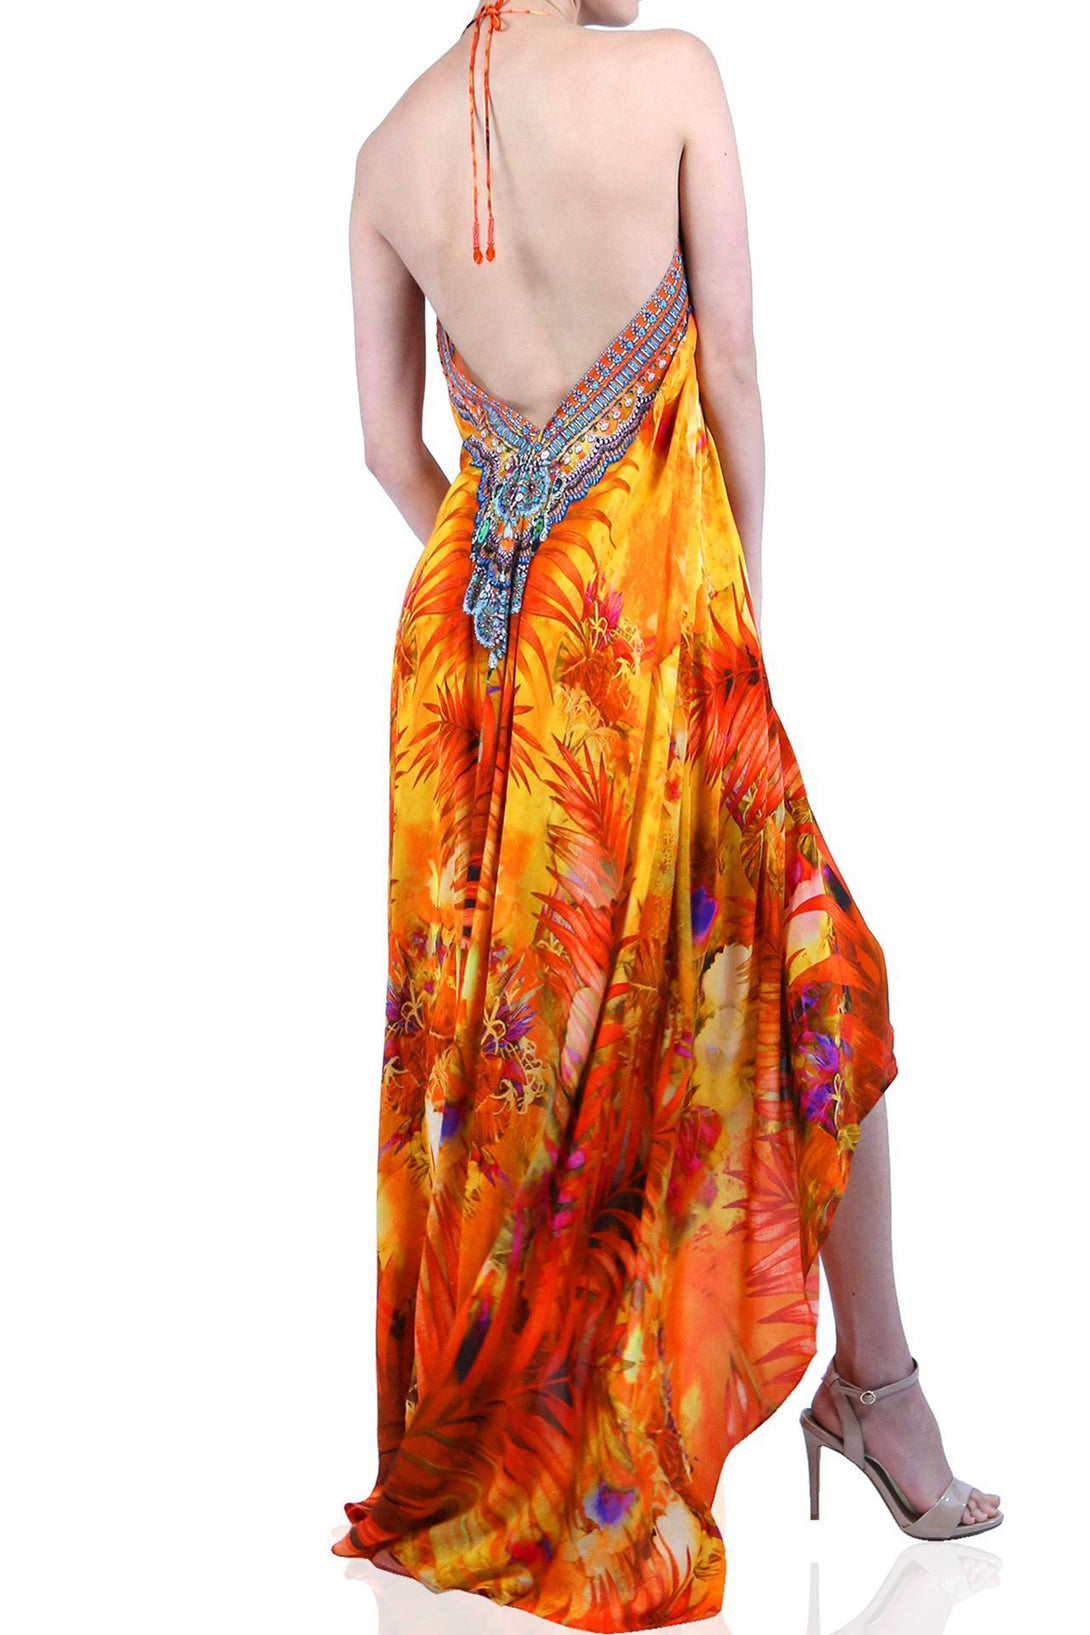  burnt orange long dress, long summer dresses for women, plunge neck cocktail dress, Shahida Parides,